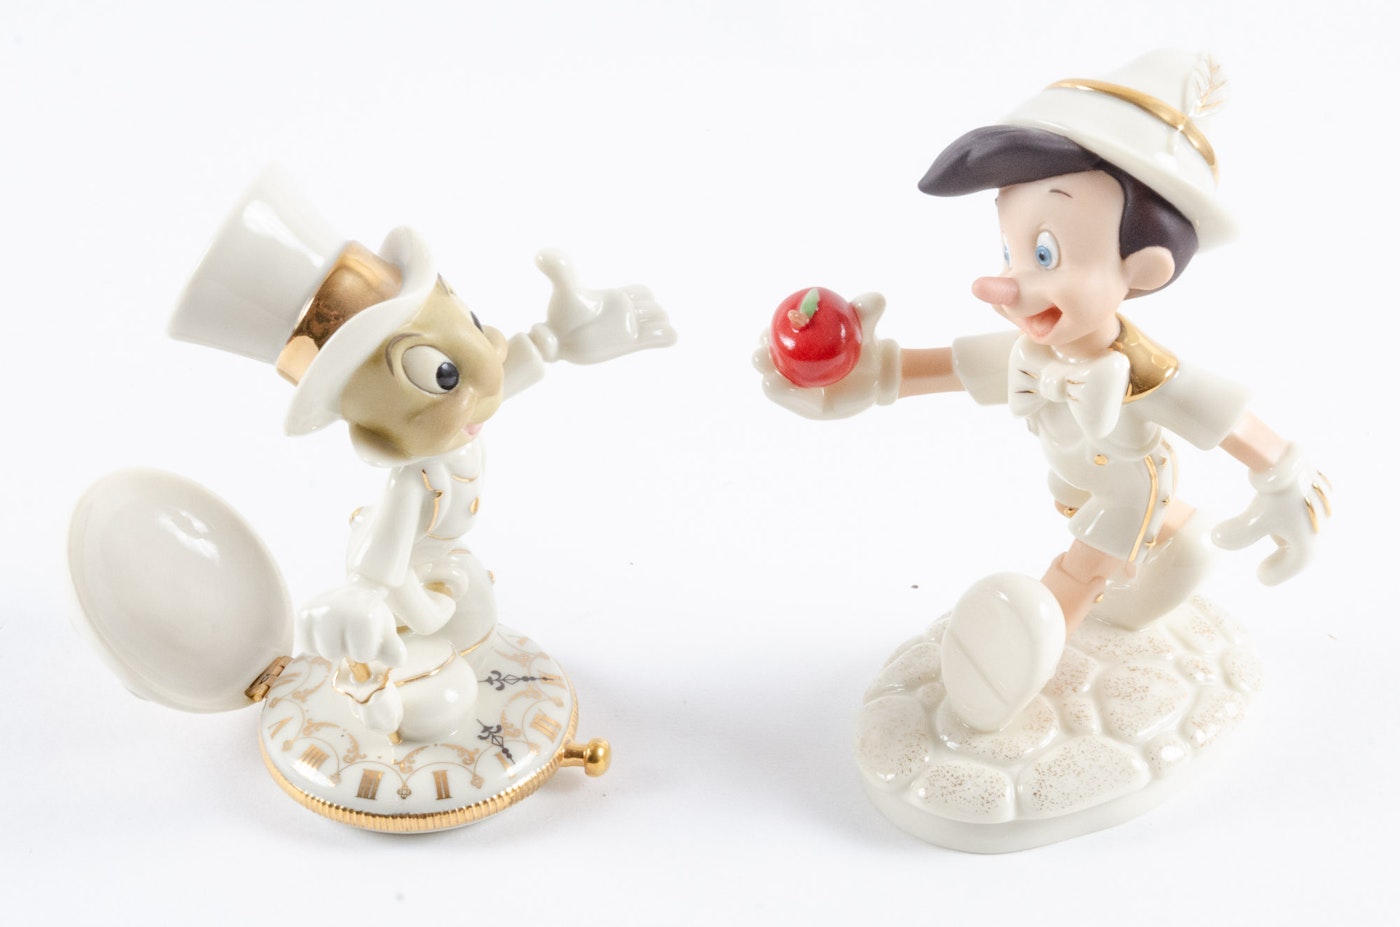 Disney "Showcase Collection" Porcelain Figurines by Lenox